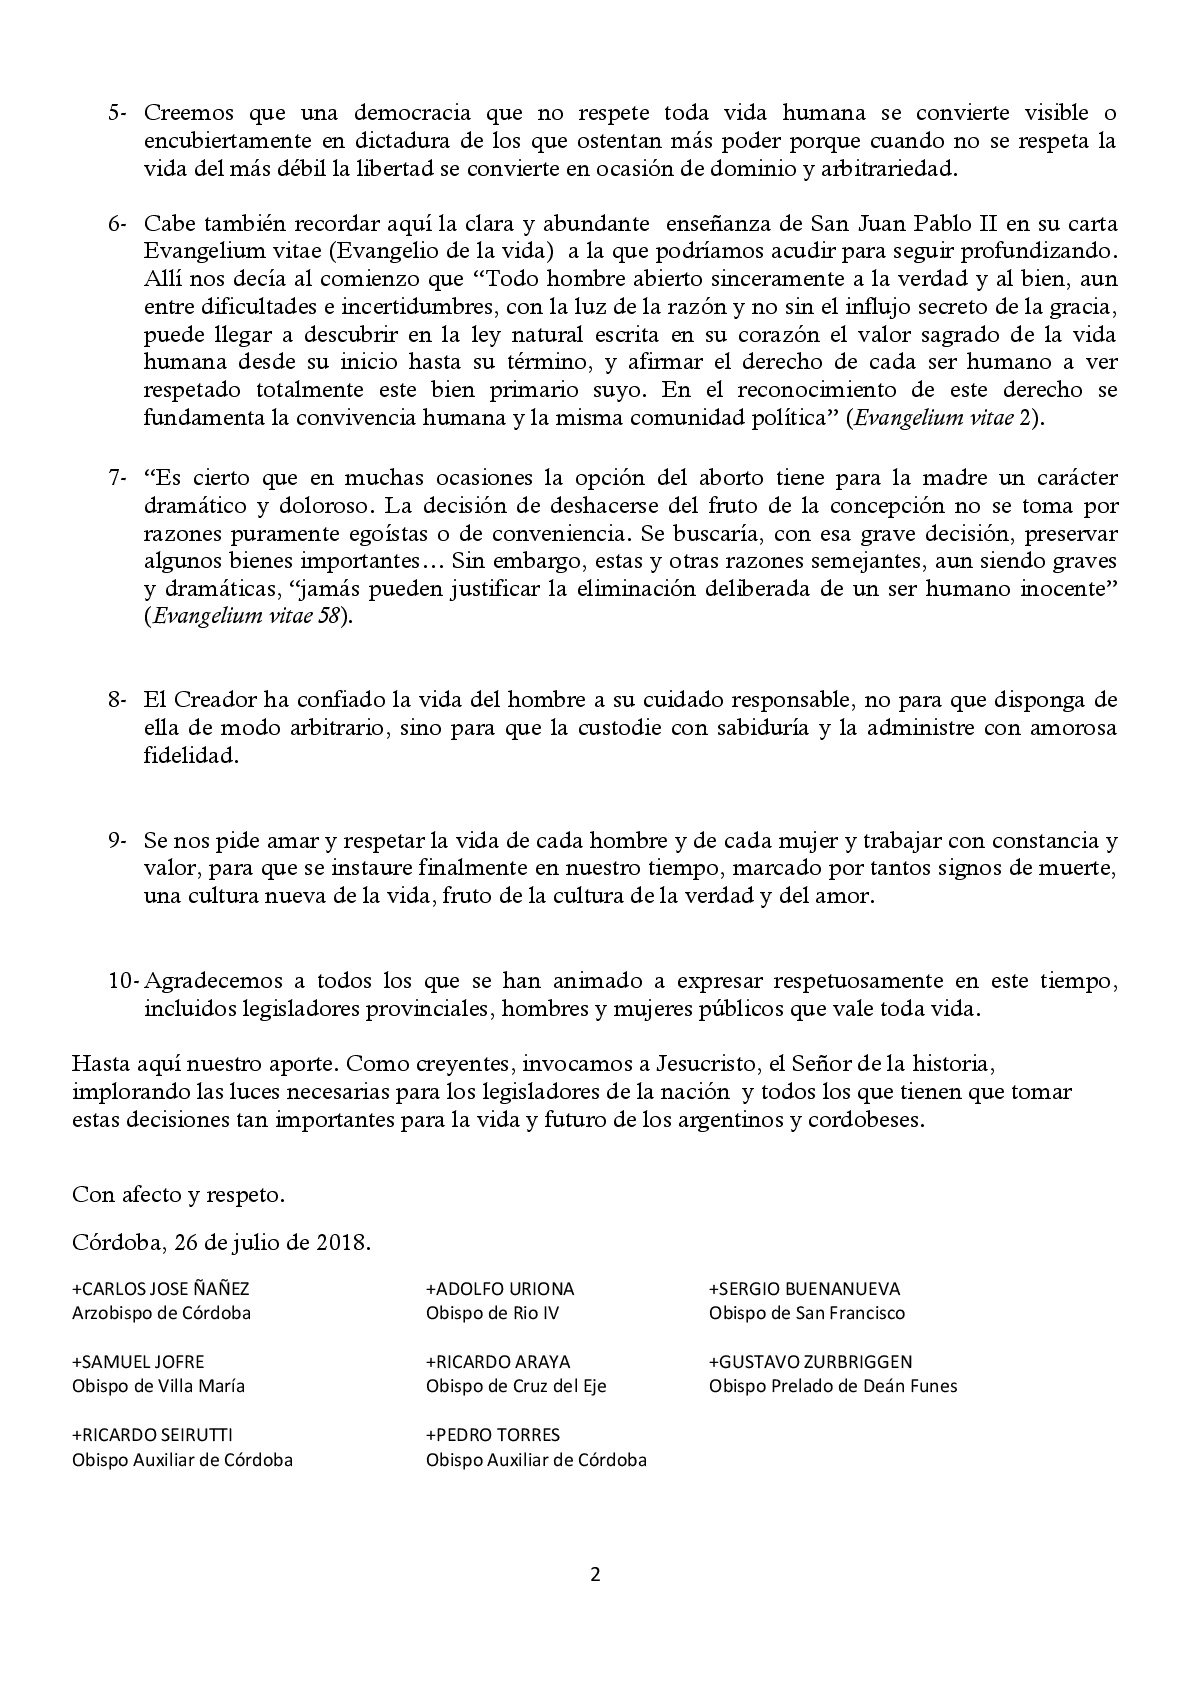 Carta de Obispos de Córdoba contra el aborto • Canal C